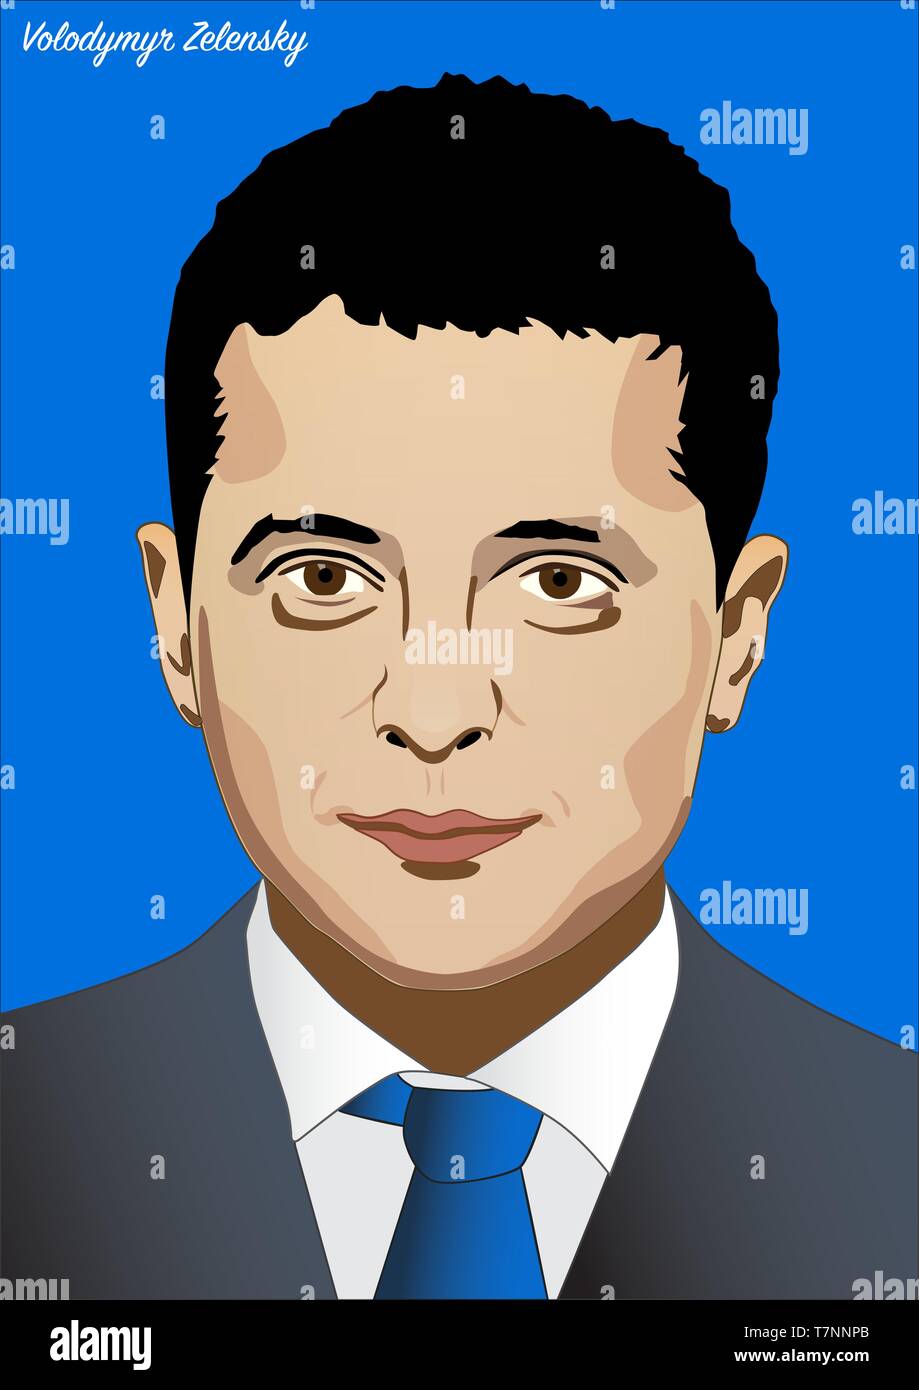 Kiev/Ukraine - May 02, 2019: Vector portrait of Volodymyr Zelensky, President of Ukraine since 2019 Stock Vector